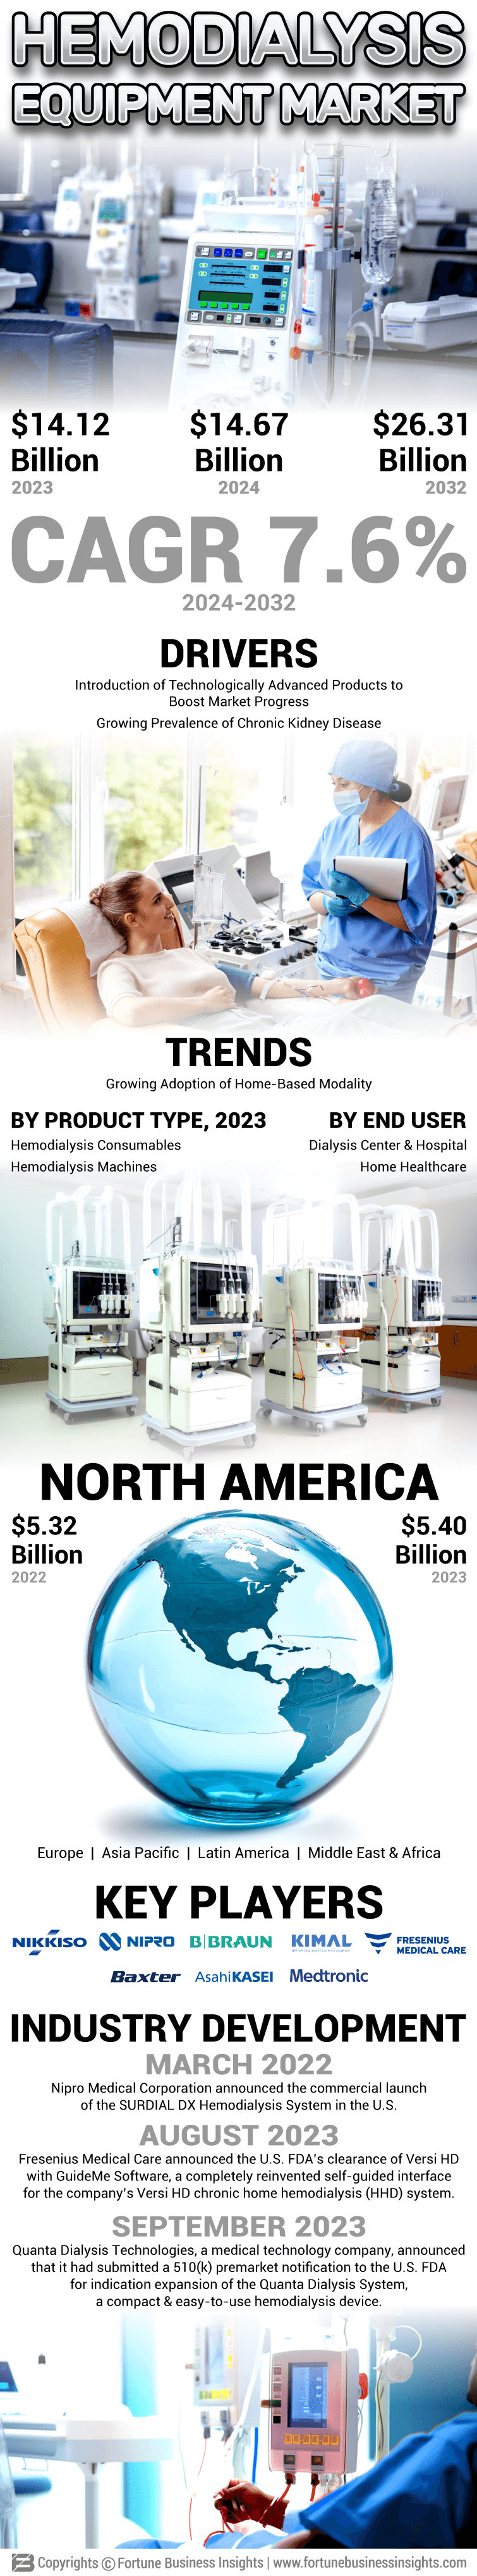 Hemodialysis Equipment Market 